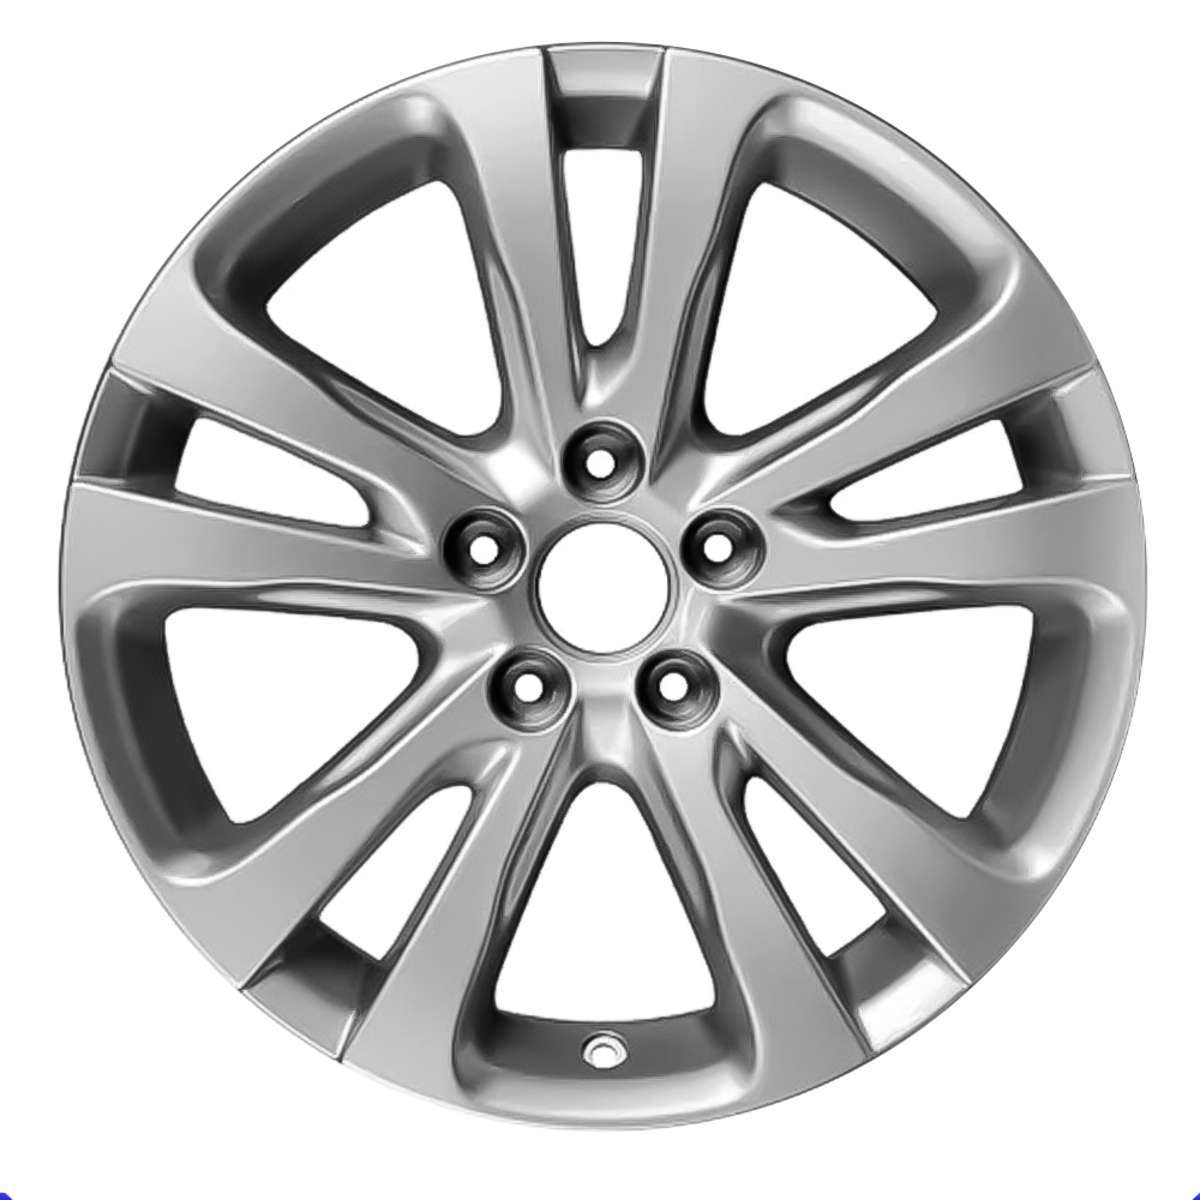 2015 Chrysler 200 New 17" Replacement Wheel Rim RW2511S